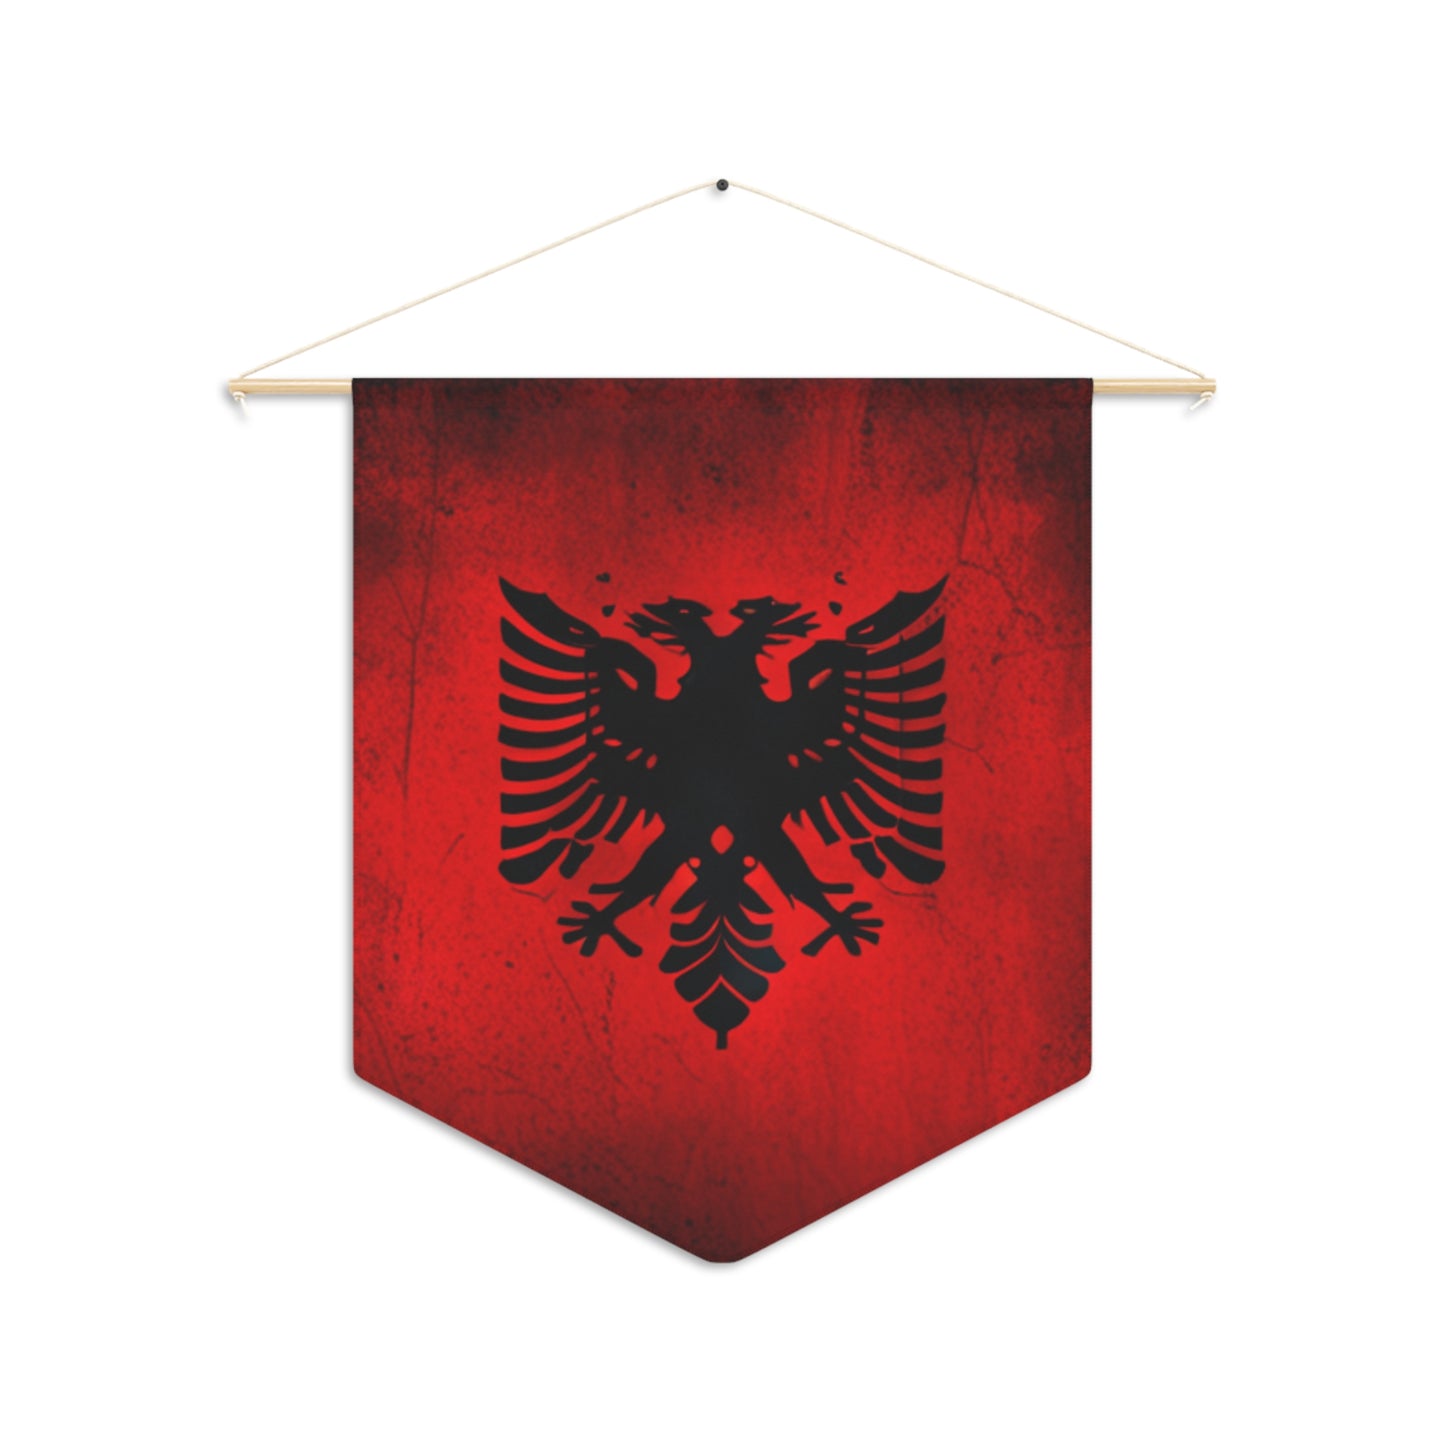 Pennant [Albania]